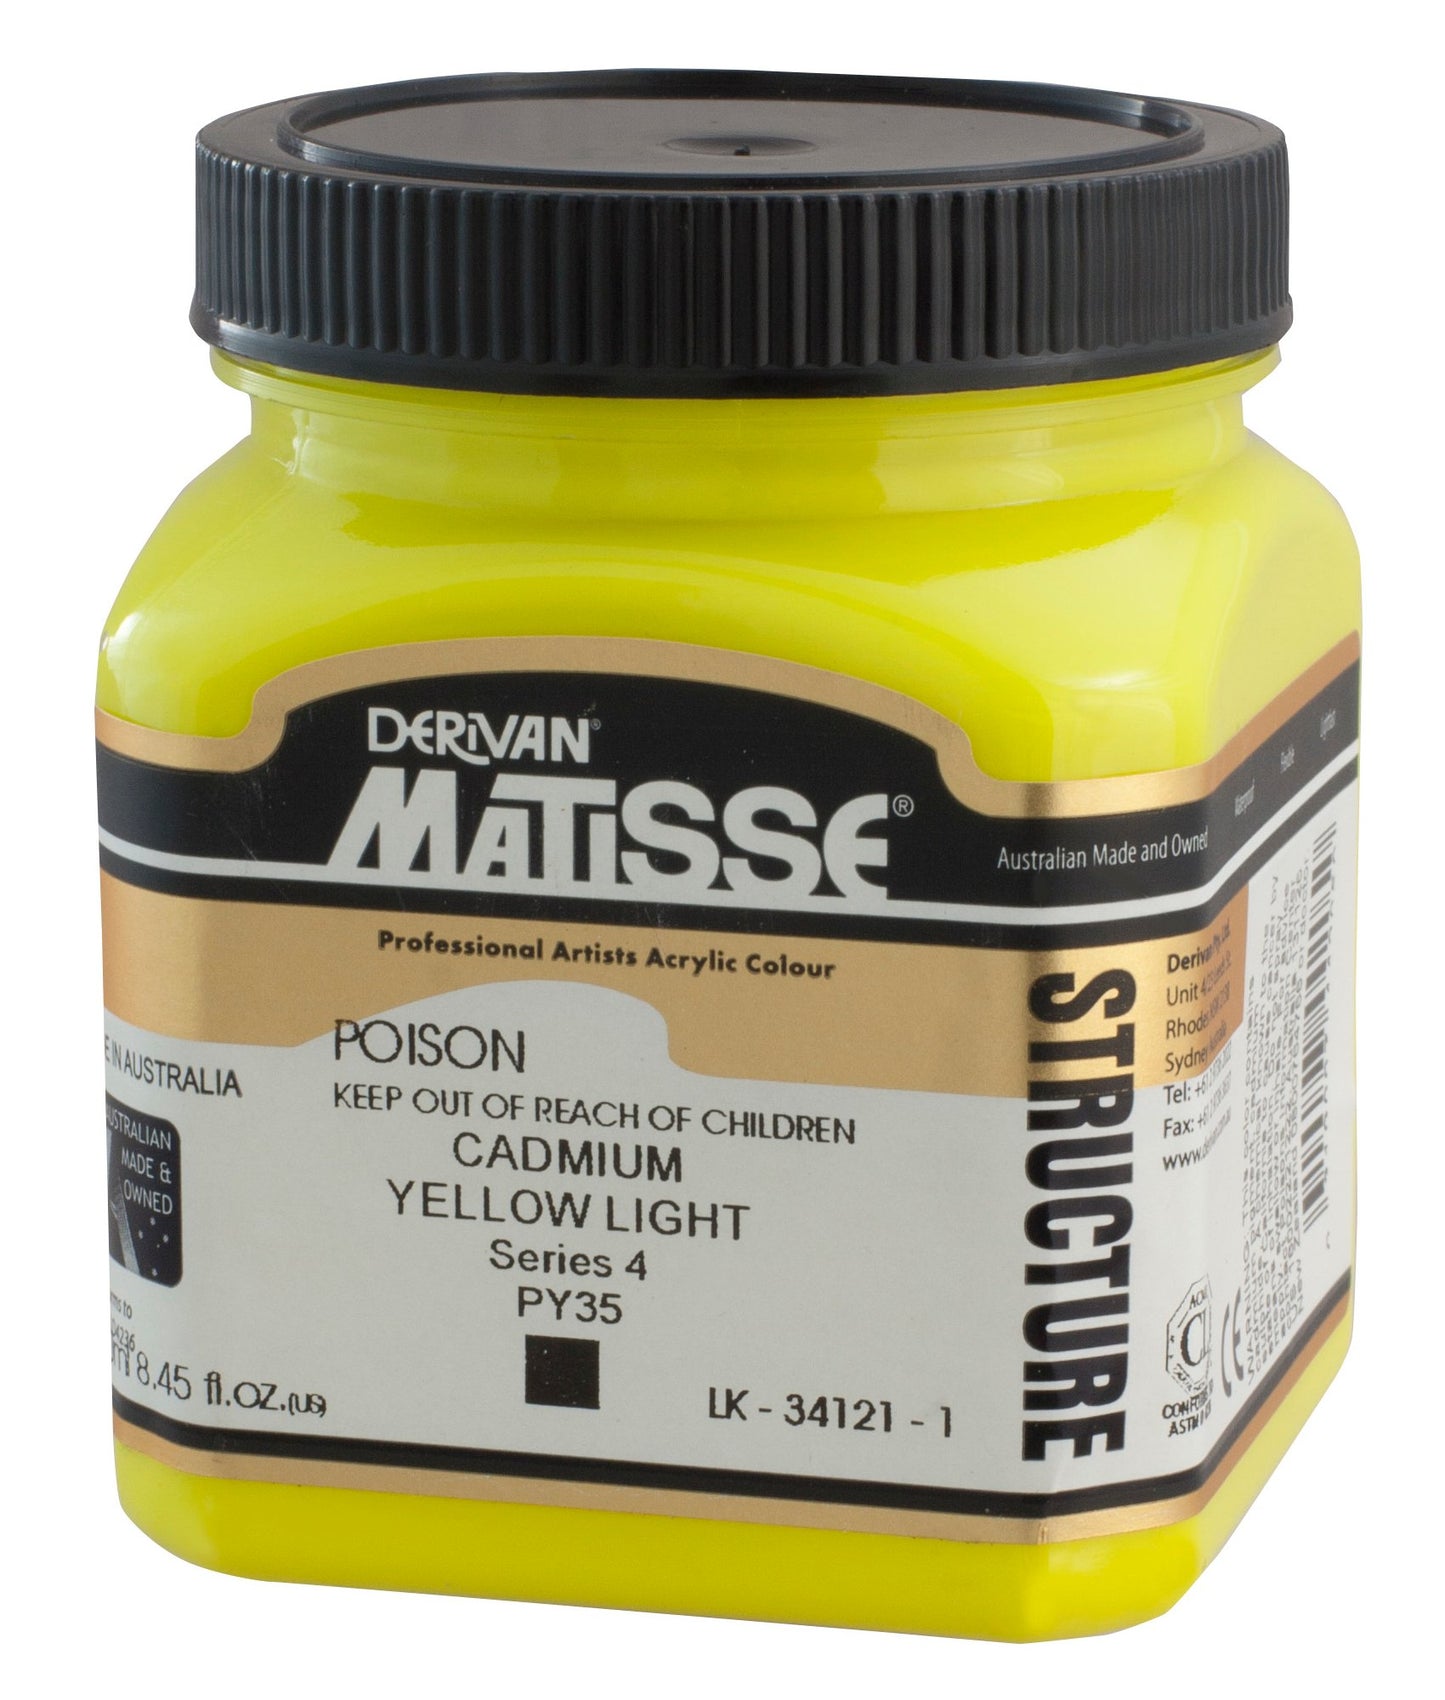 Derivan Matisse, Structure, Cadmium Yellow Light